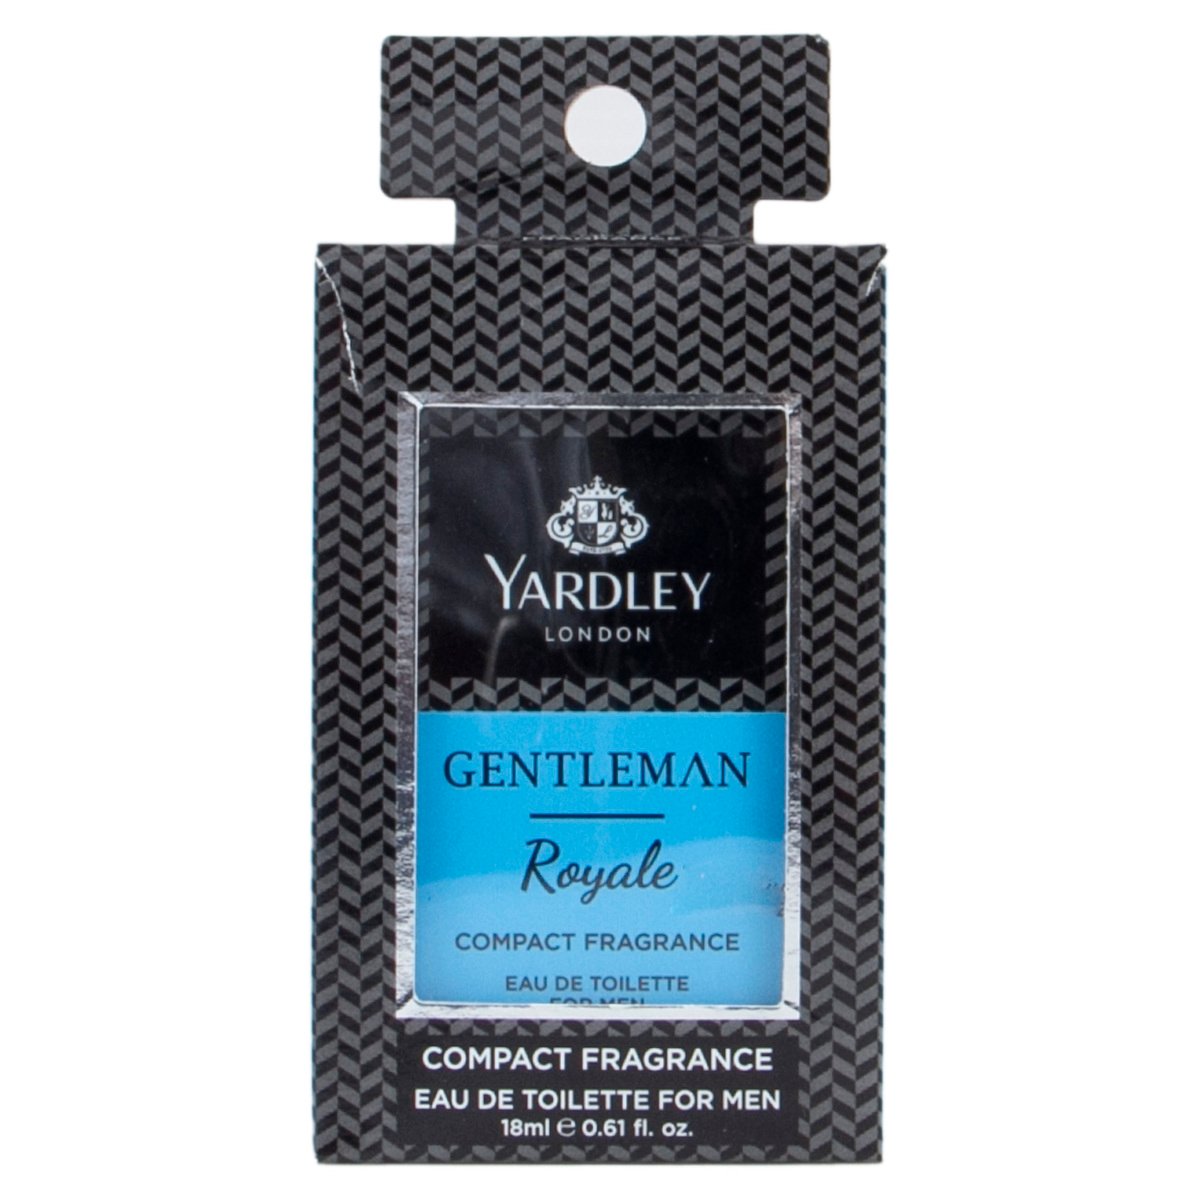 Yardley Gentleman Royale Compact Fragrance EDT For Men 18 ml